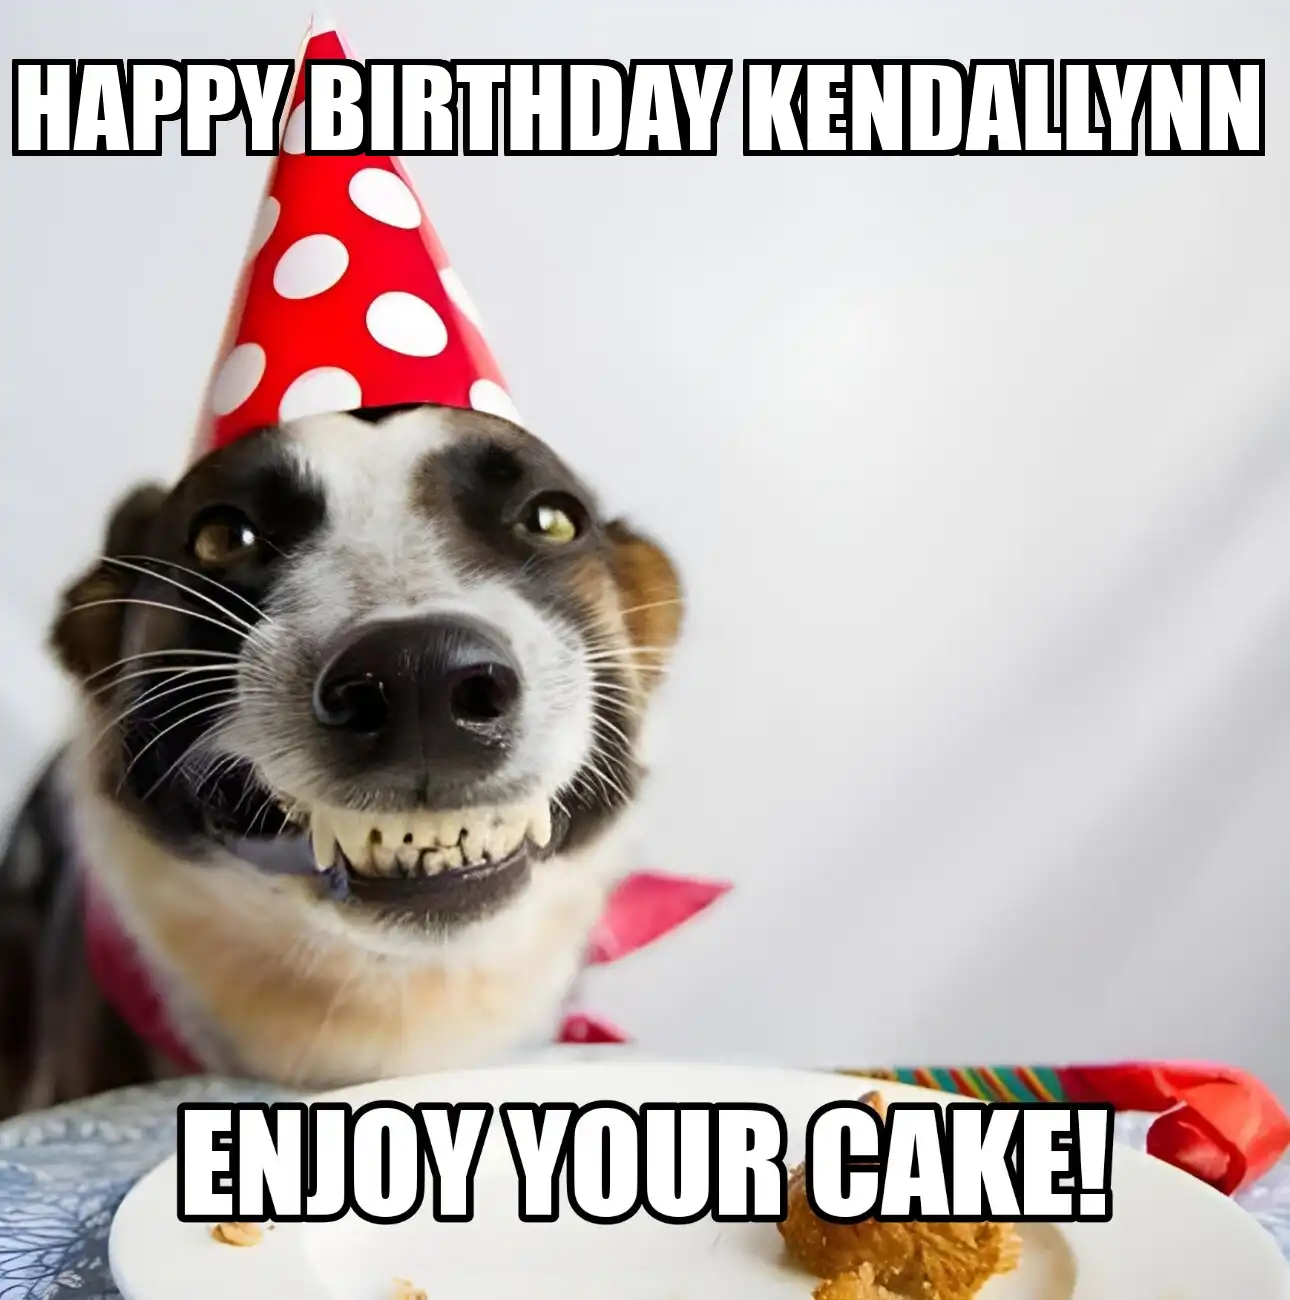 Happy Birthday Kendallynn Enjoy Your Cake Dog Meme